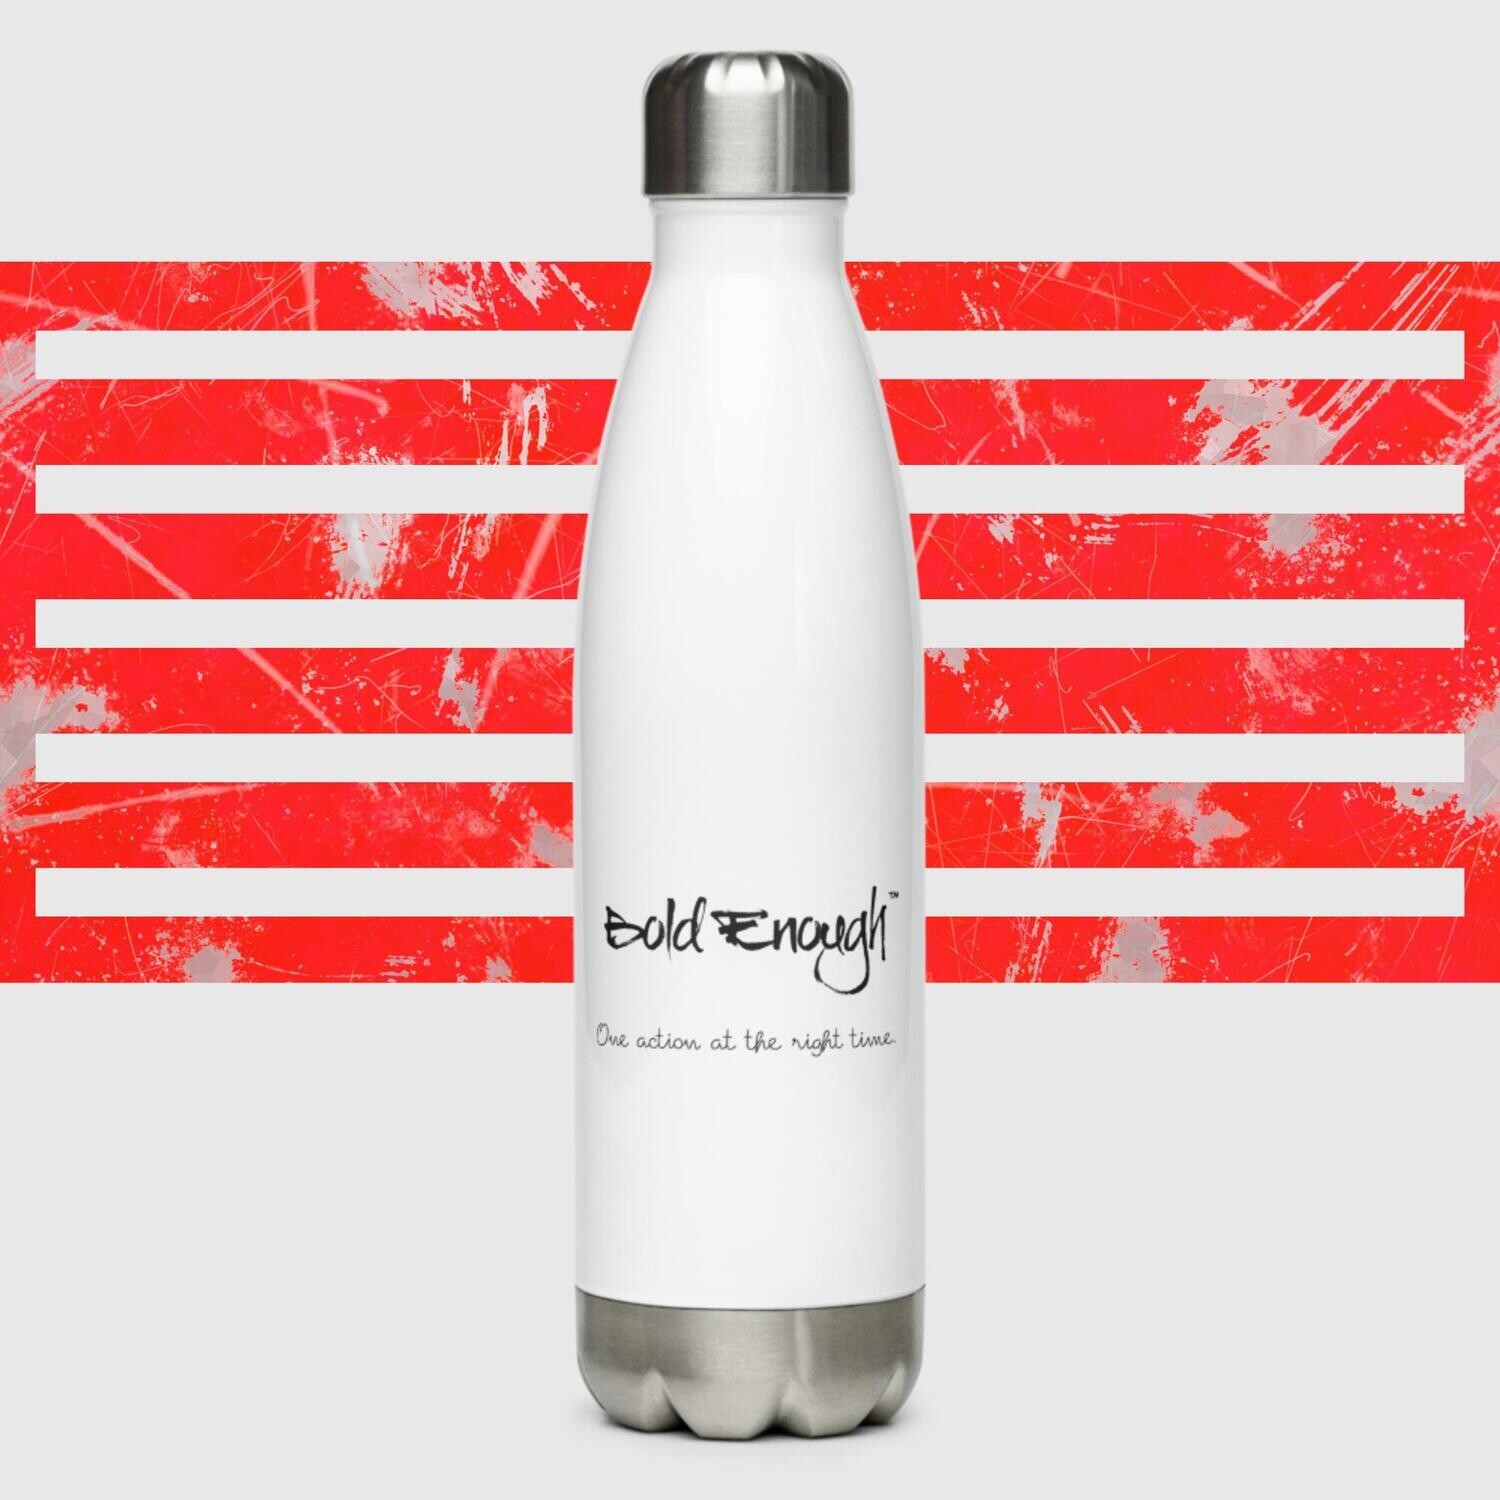 "Bold Enough" Branding Stainless Steel Water Bottle